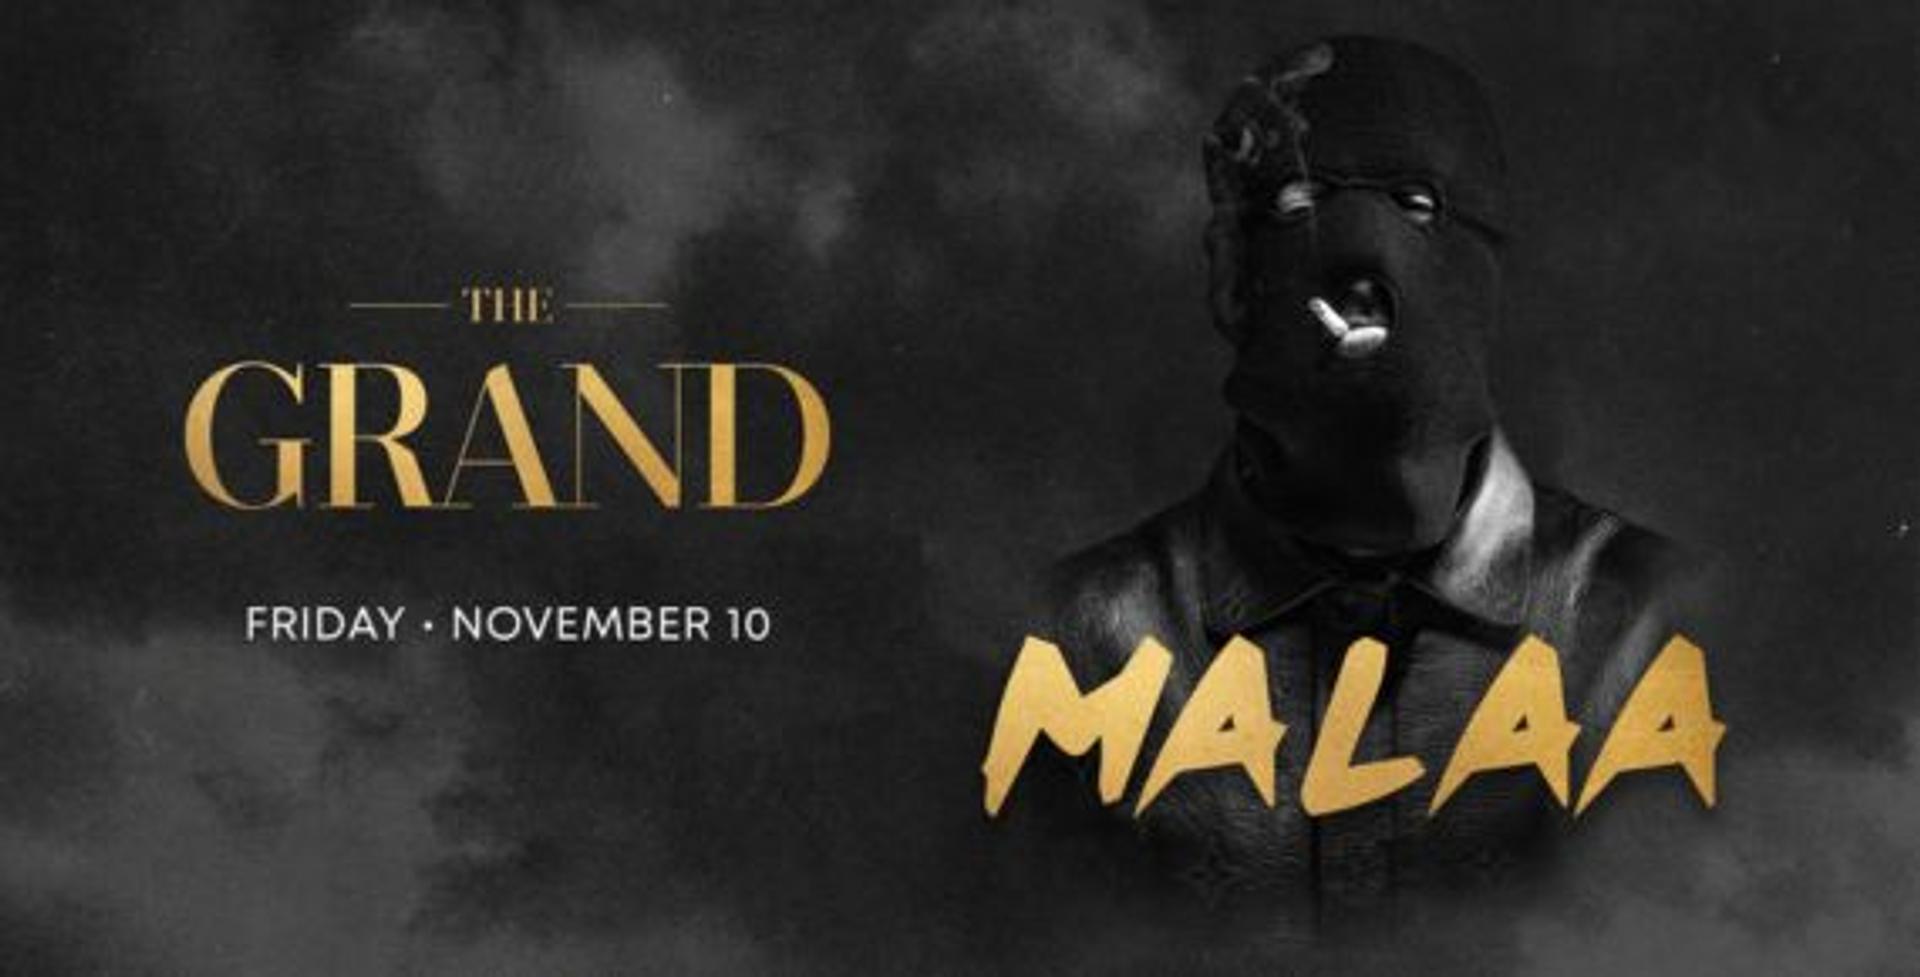 The Grand: Malaa